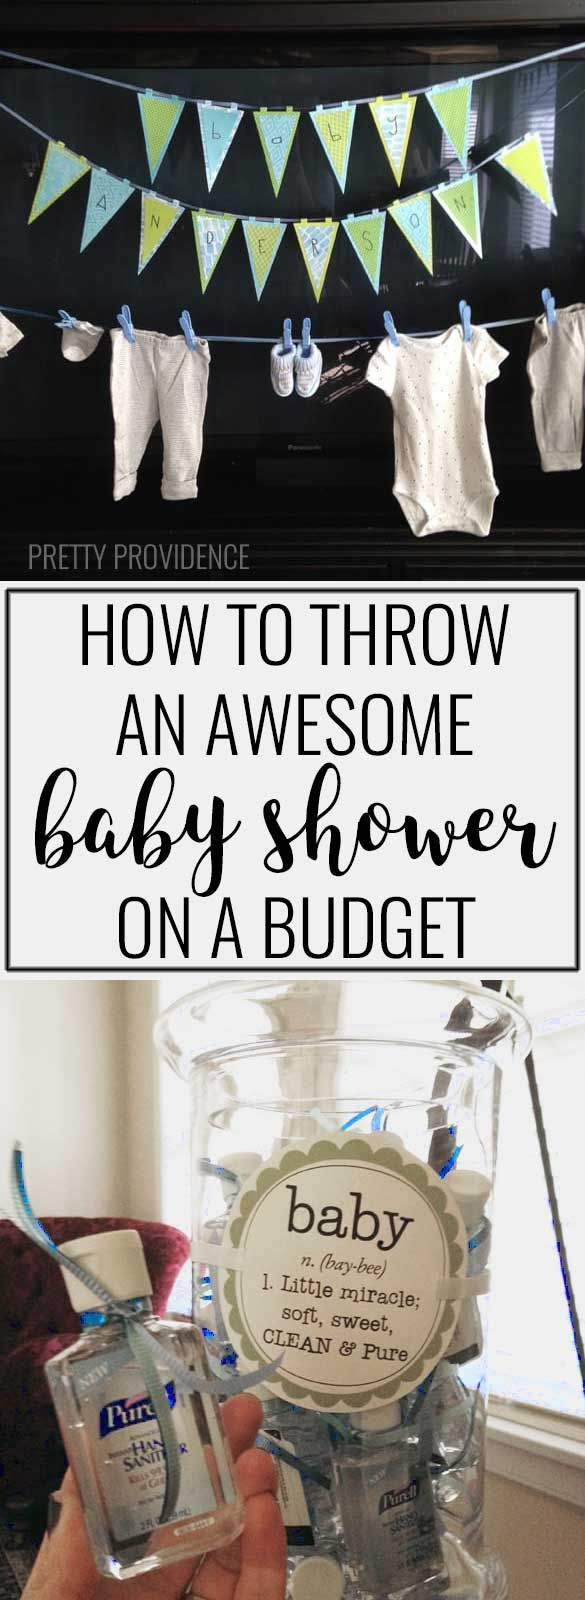 DIY Baby Shower Ideas On A Budget
 Best 25 Bud baby shower ideas on Pinterest